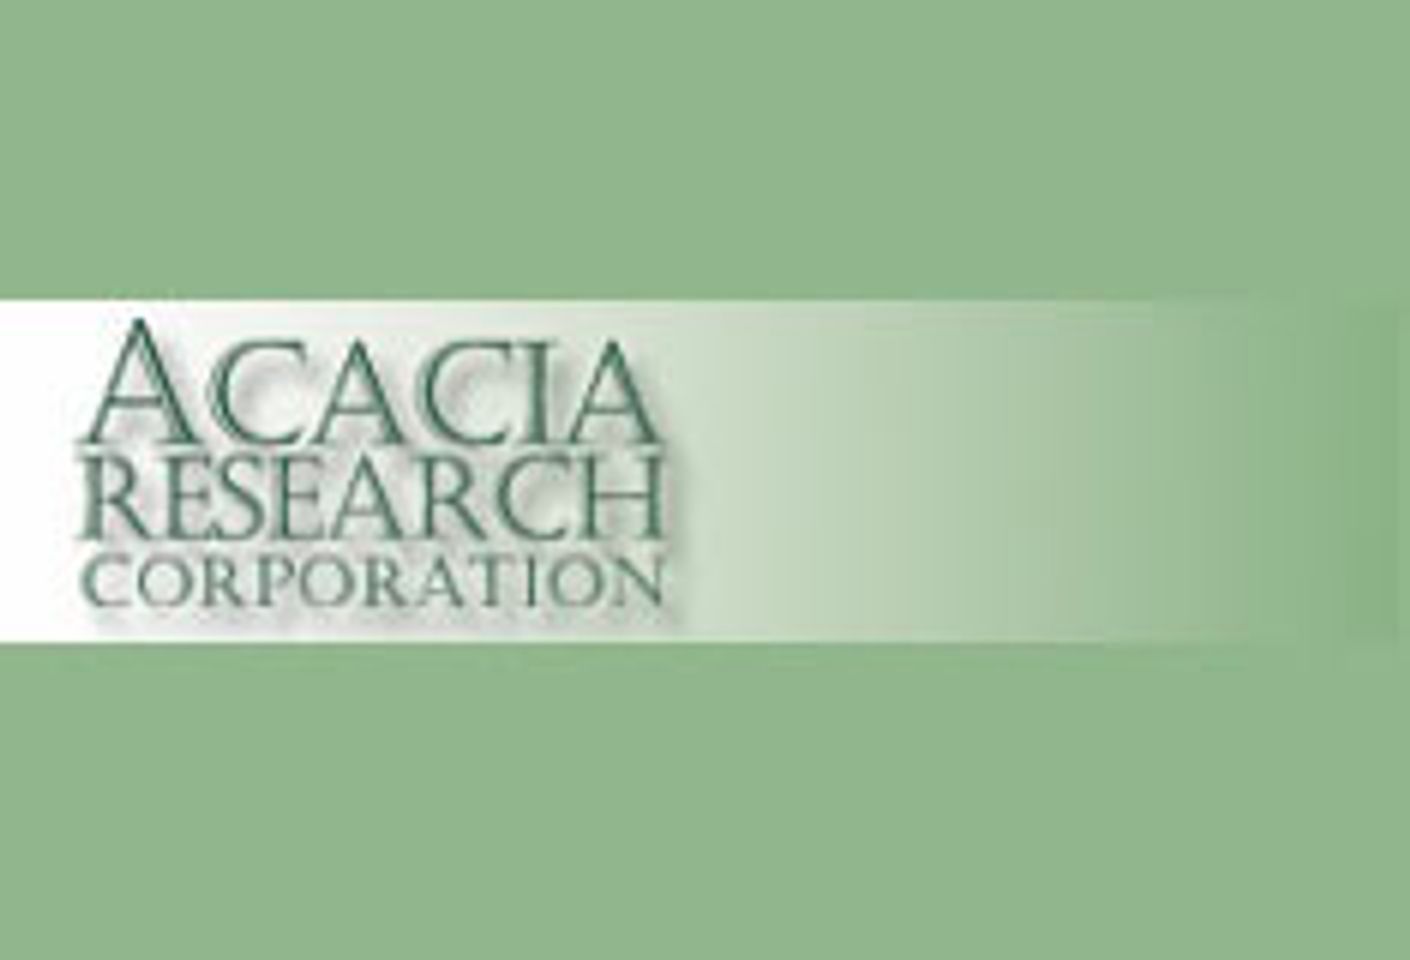 Acacia Said Enforcing Wi-Fi Gateway Page Redirect Patent